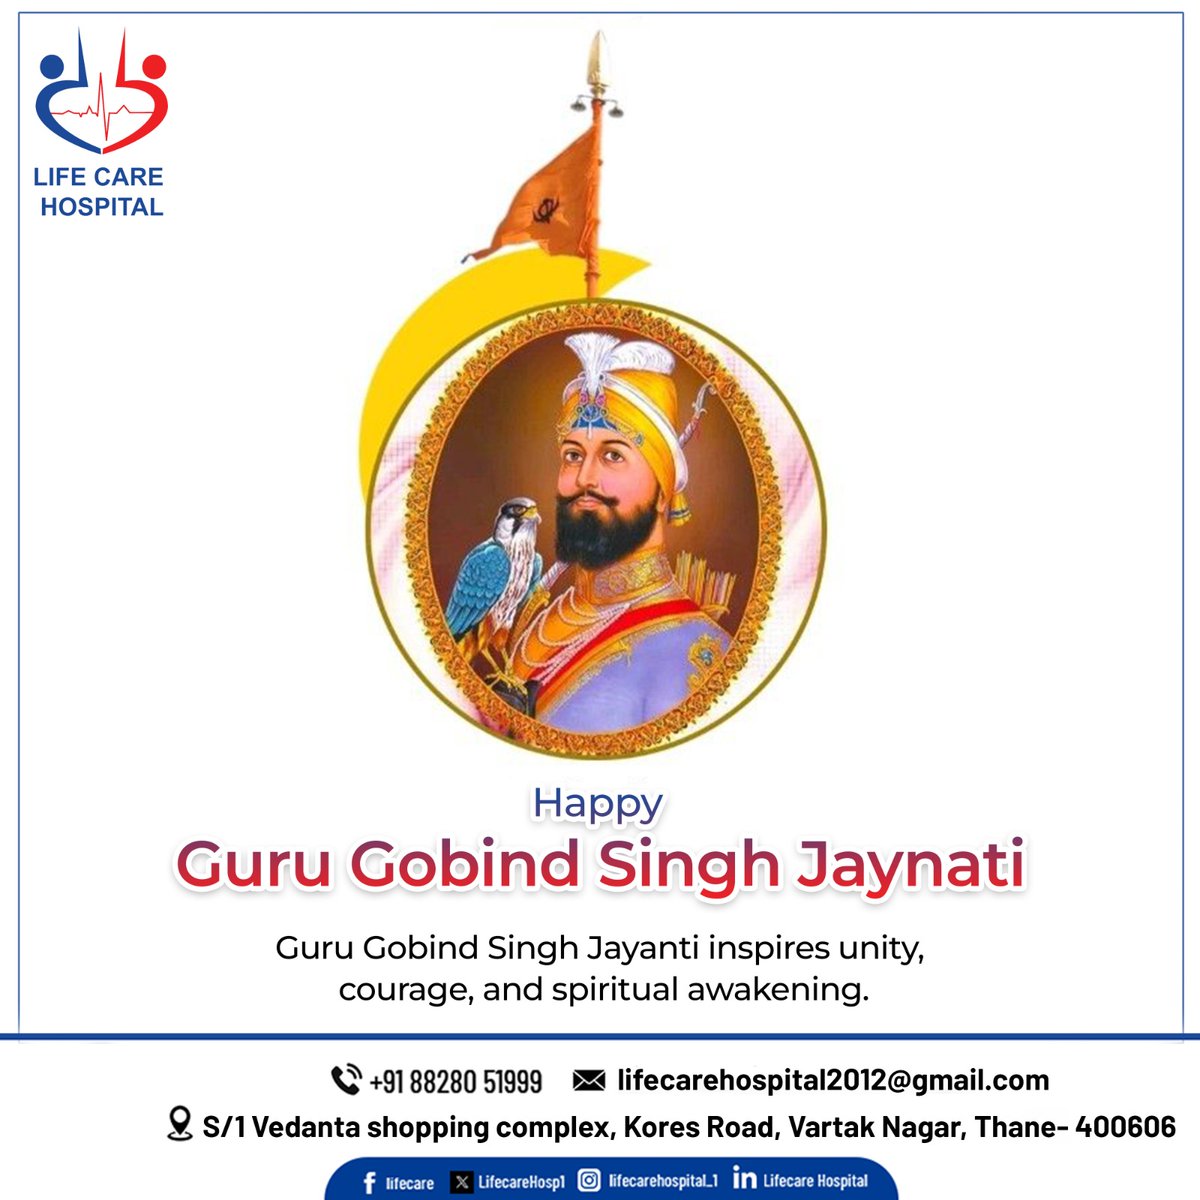 Honoring the profound teachings of Guru Gobind Singh Ji. Happy Guru Gobind Singh Jayanti.
.

.
#GuruGobindSinghJayanti #DivineWisdom #CourageousSoul #SikhHeritage #SpiritualLegacy #Inspiration #EternalTeachings #guru #gurugobindsingh #lifecarehospital